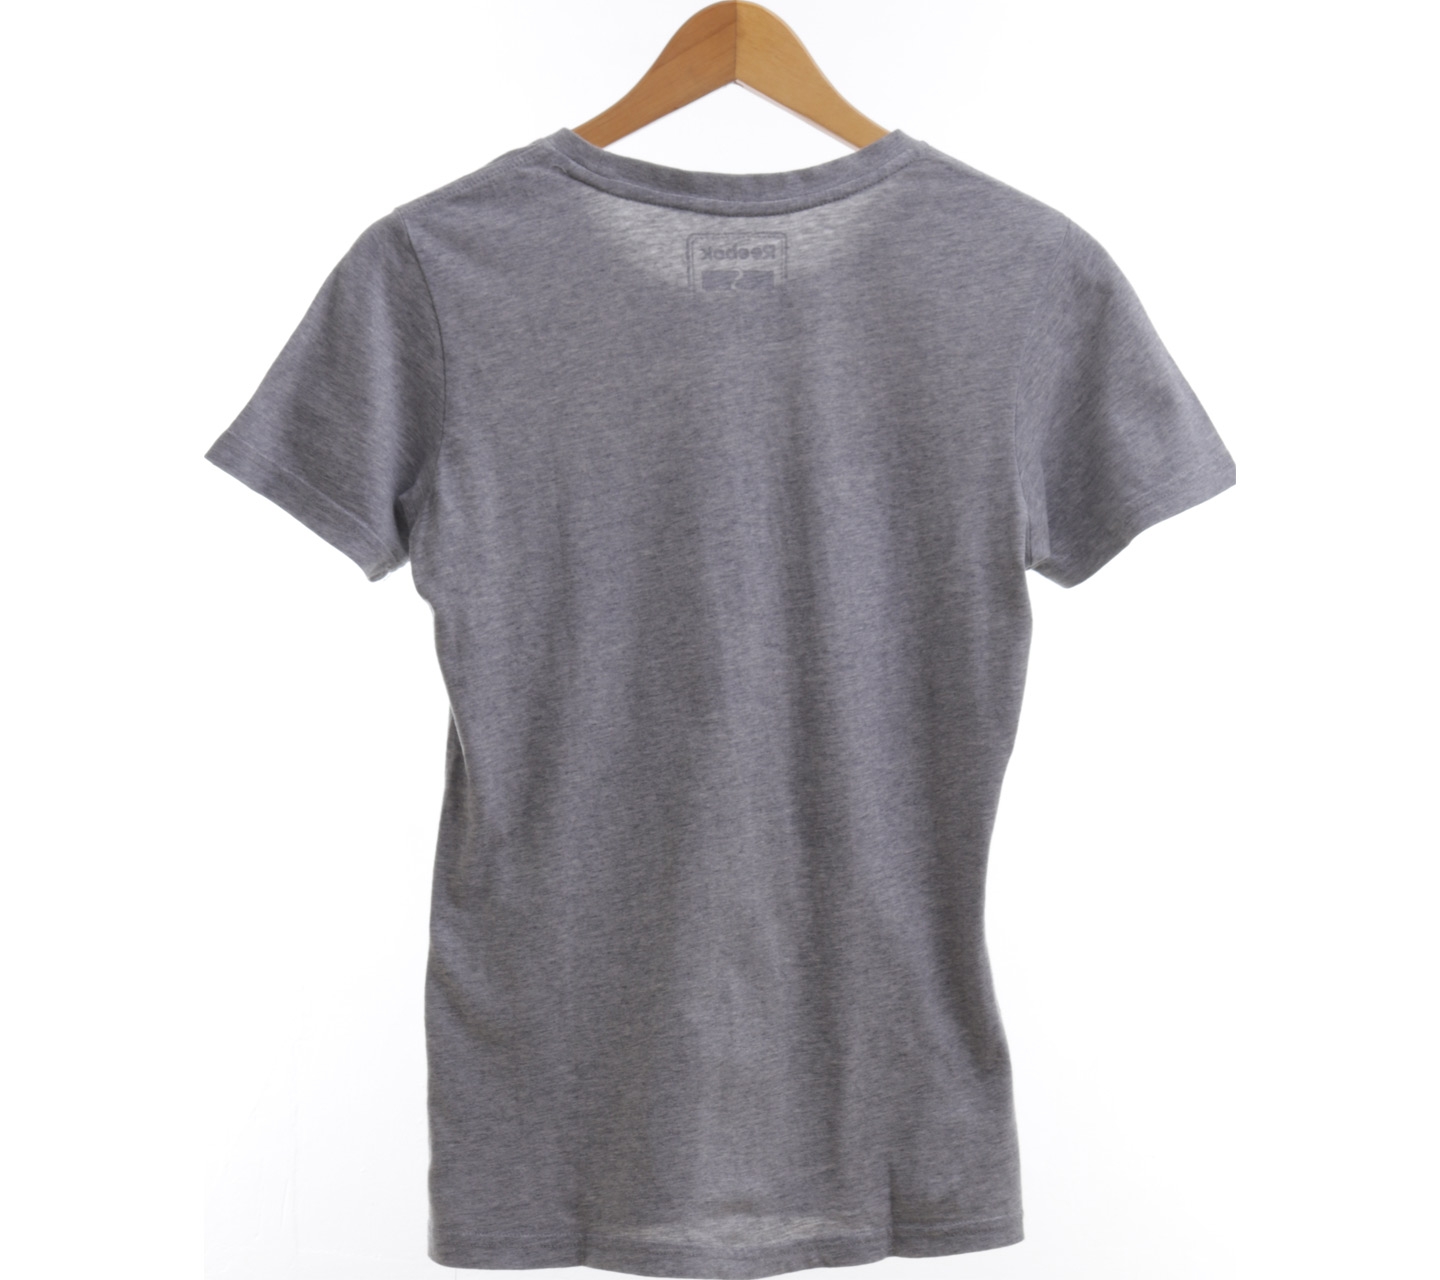 Reebok Grey T-Shirt